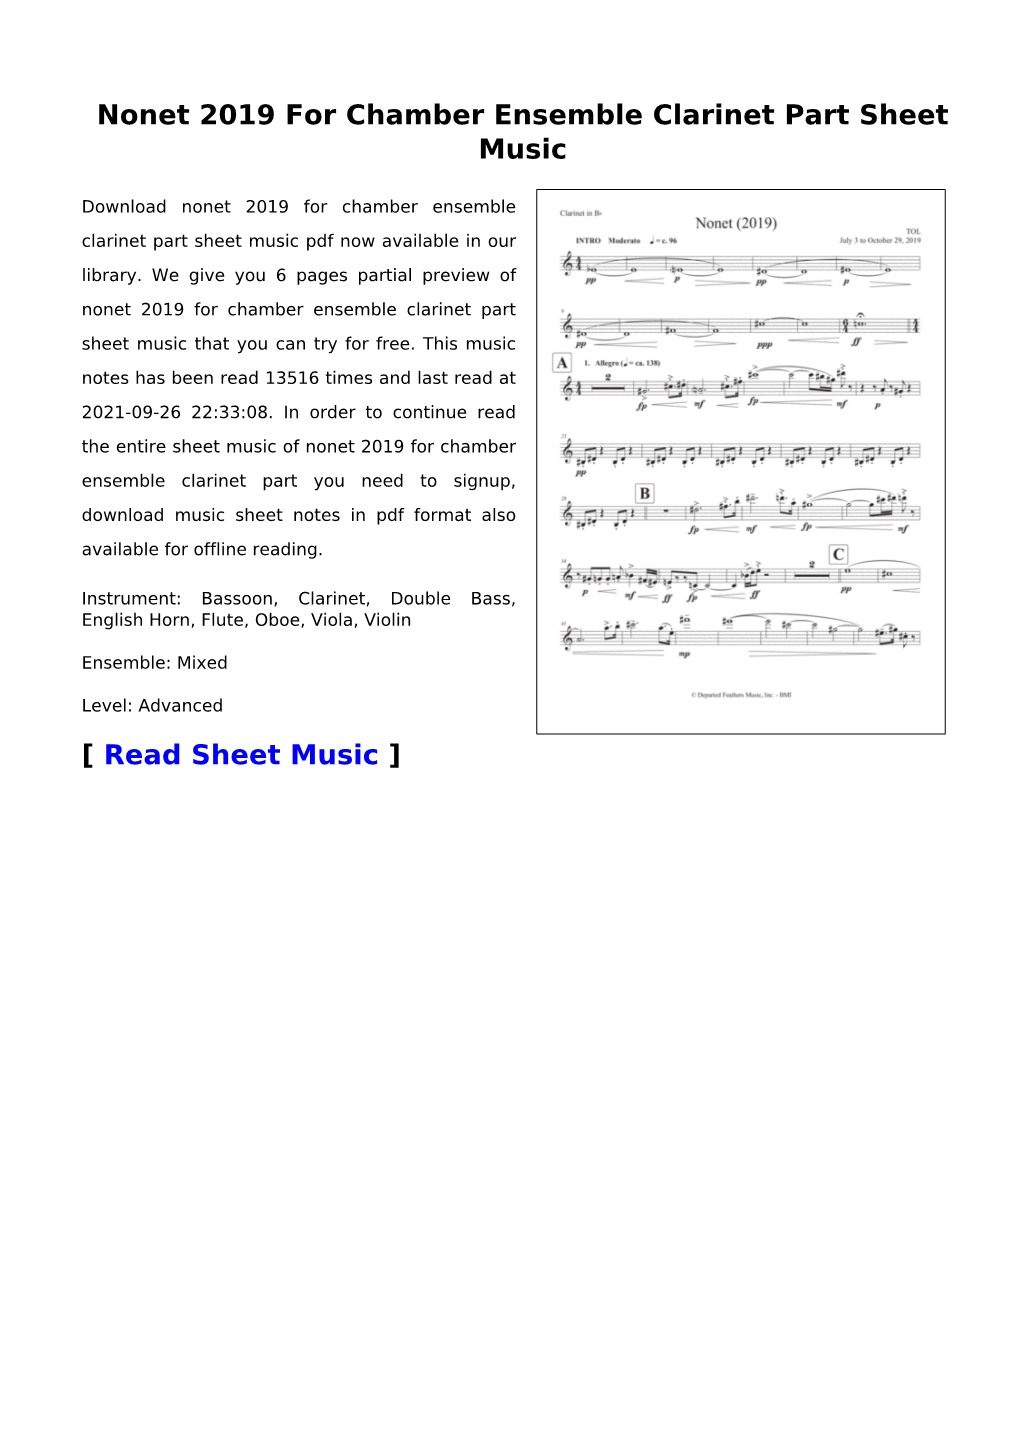 Nonet 2019 for Chamber Ensemble Clarinet Part Sheet Music